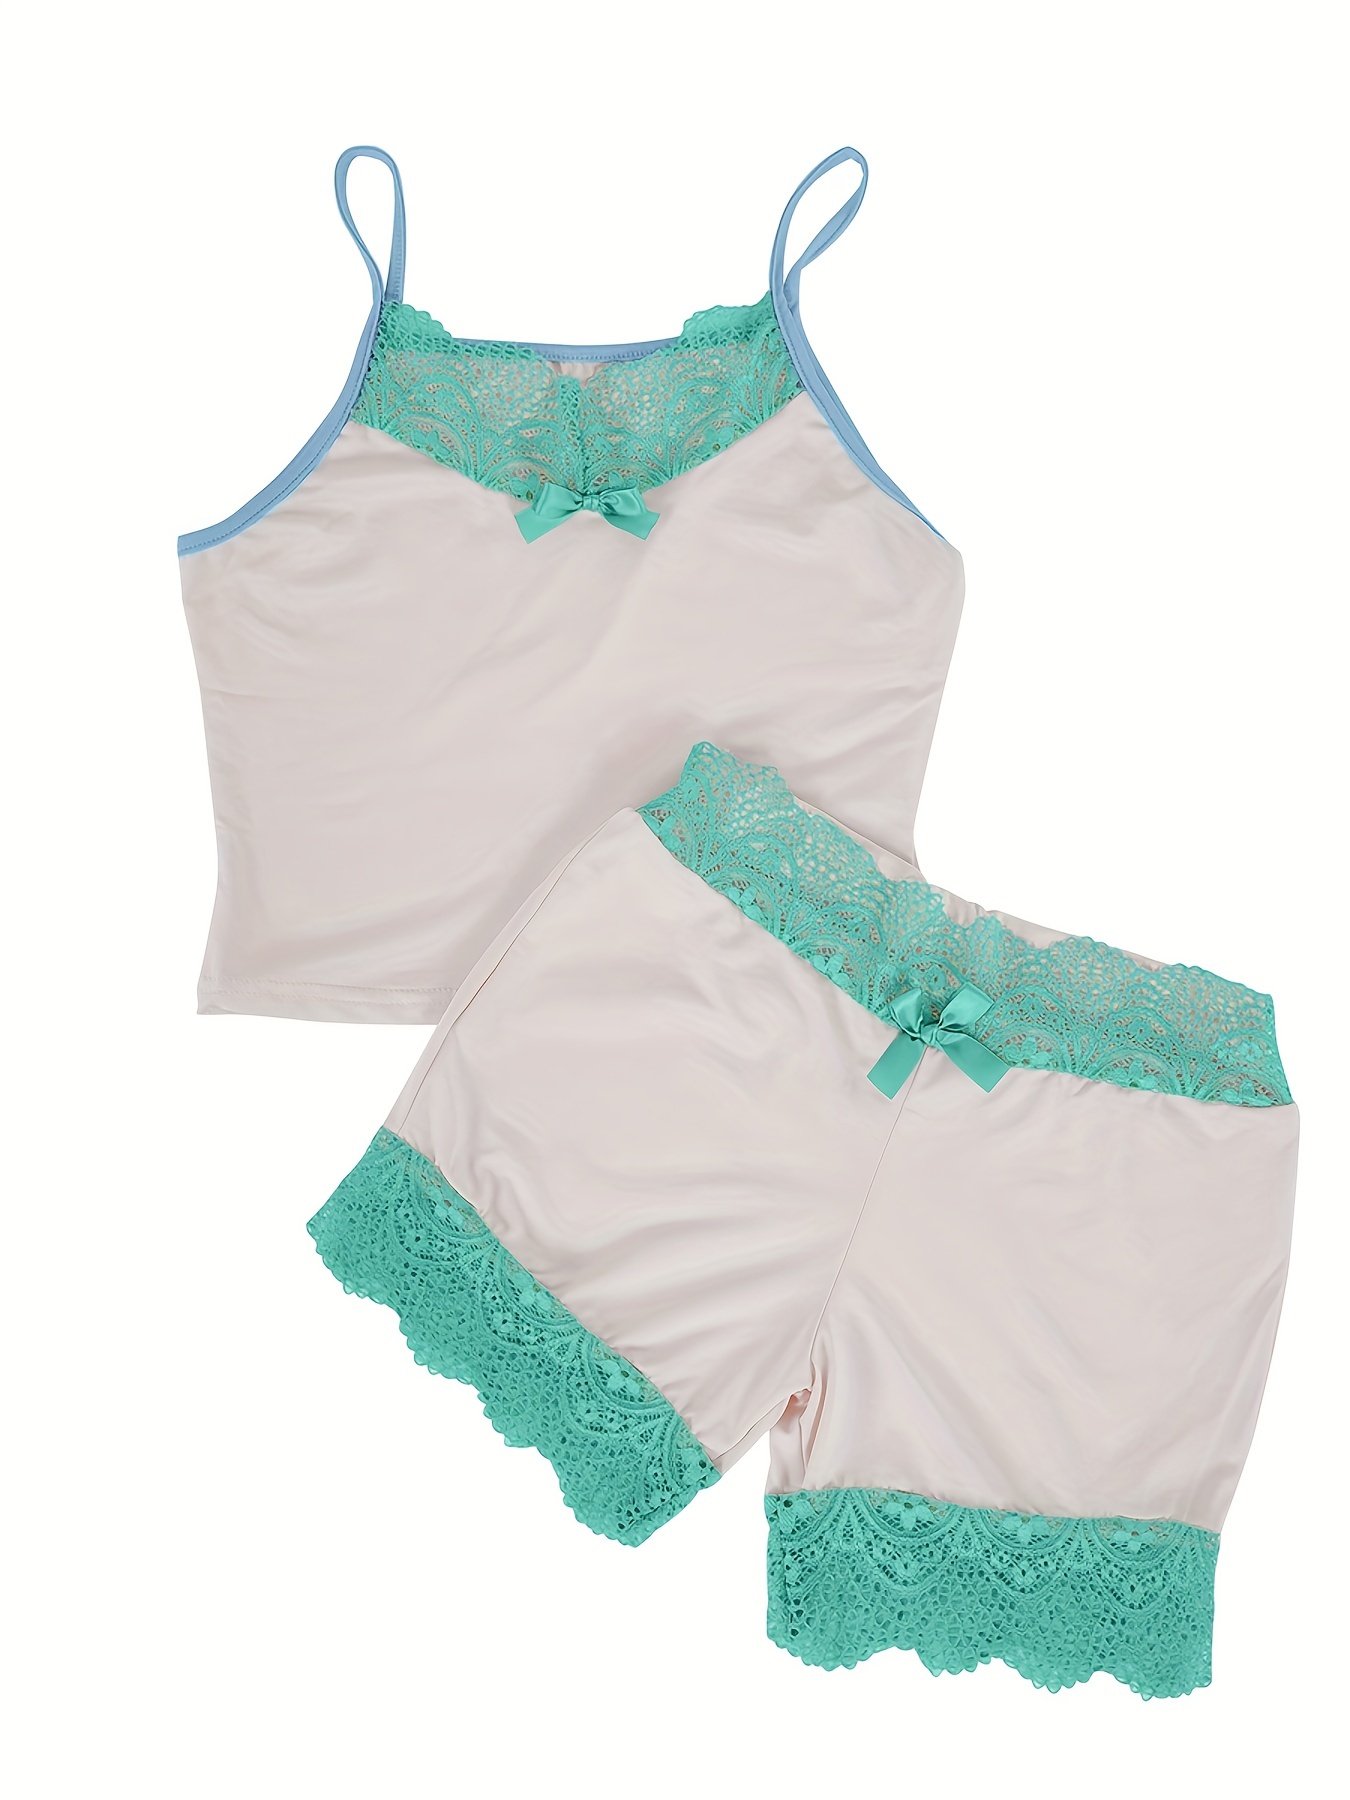 Women's 2 Piece Pajamas Set Heart Print Lace Cami Shorts Suit PJs Camisole  Set Sleepwear Lingerie Nightwear